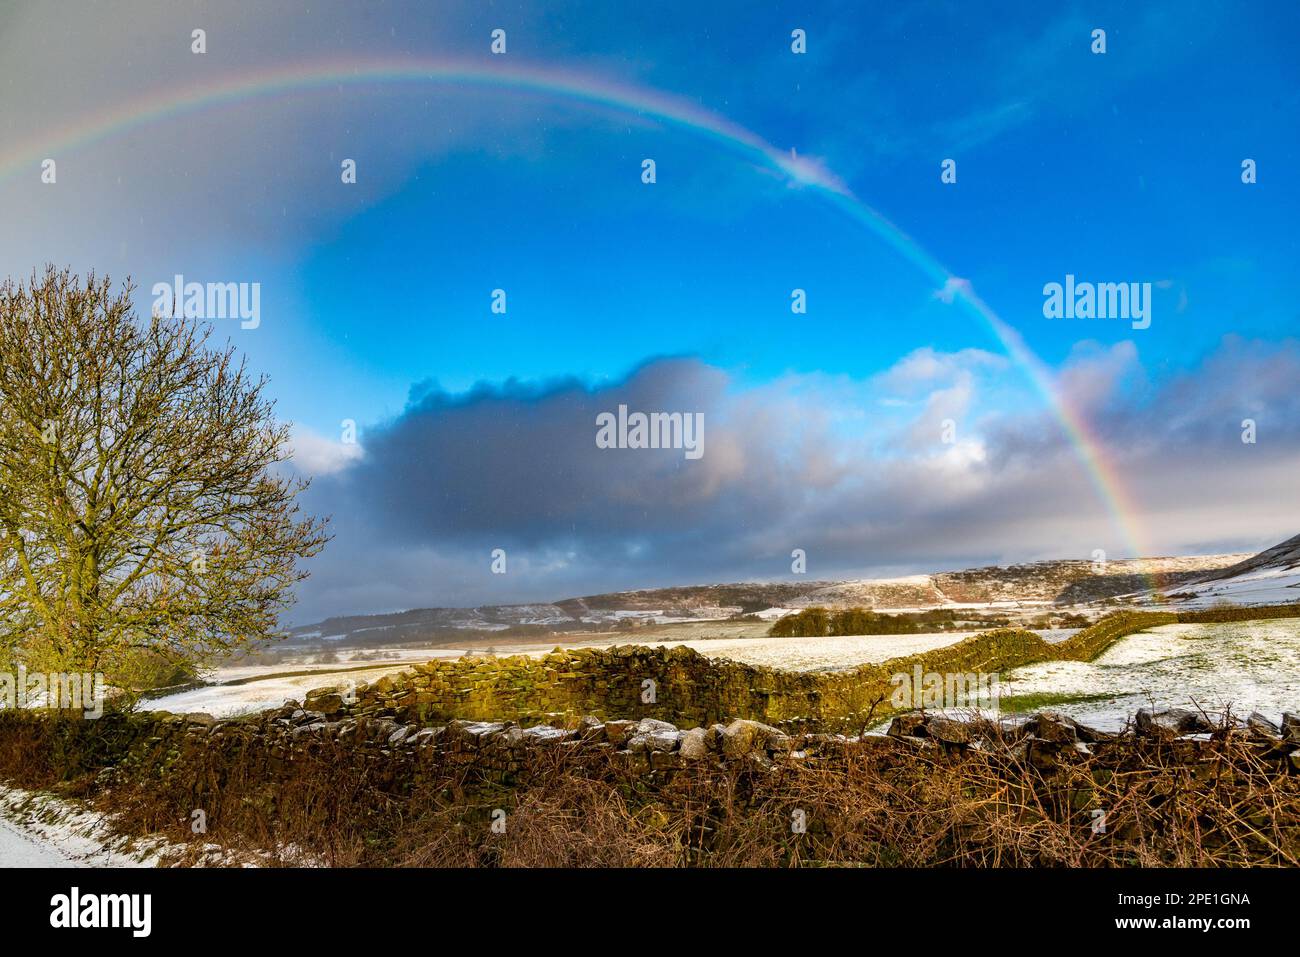 A frosty morning and rainbow, Chipping, Preston, Lancashire, UK Stock Photo